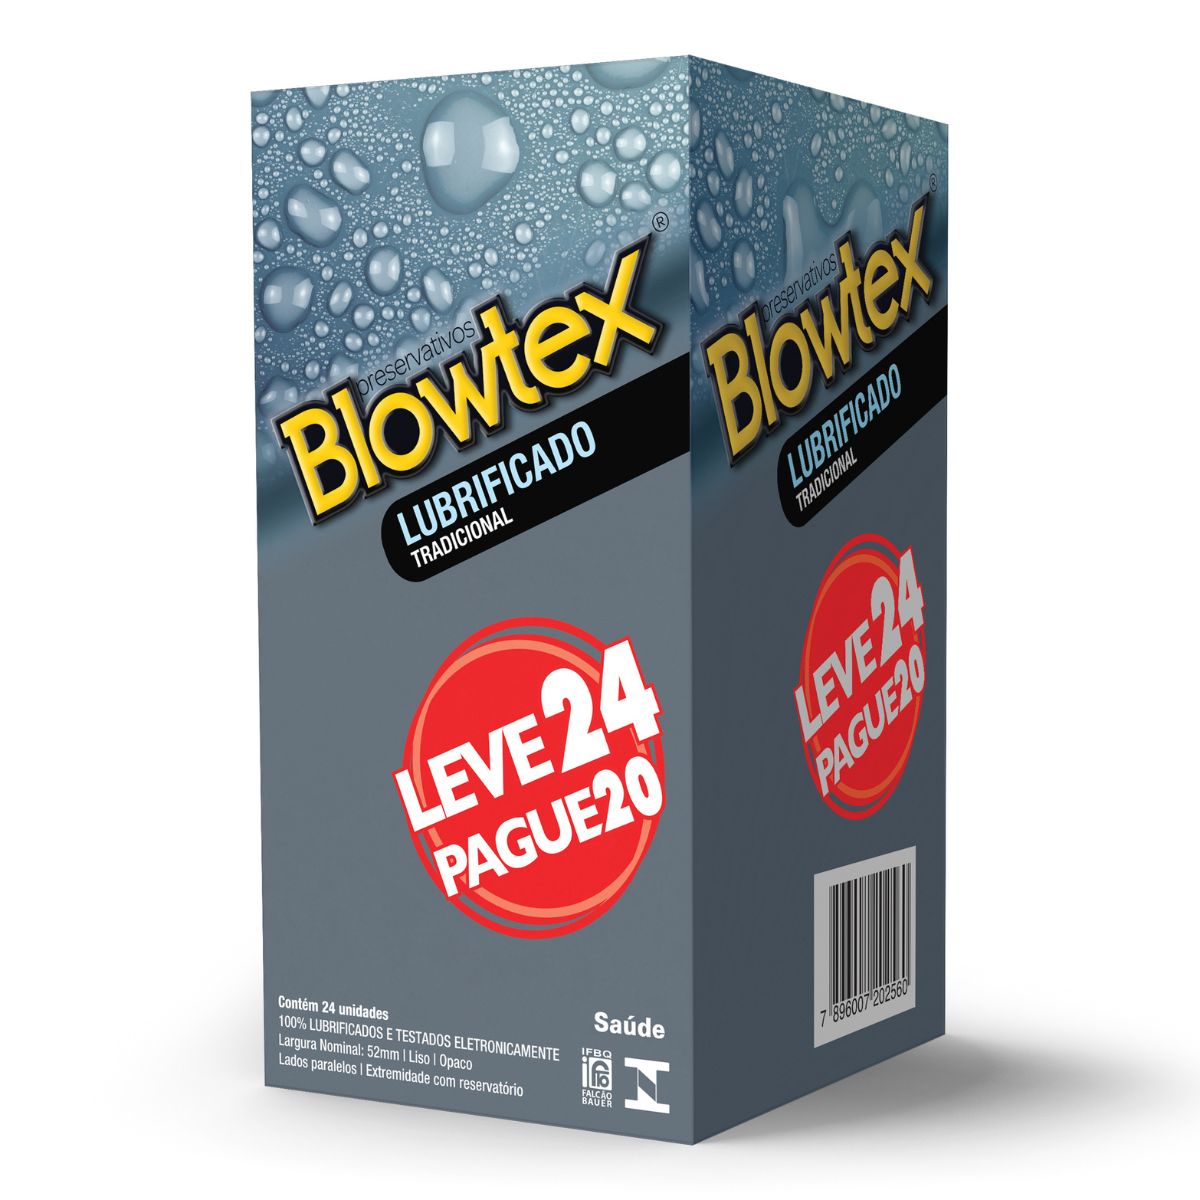 2 Pacotes de Preservativo Blowtex Lubrificado - 48 Unidades Total